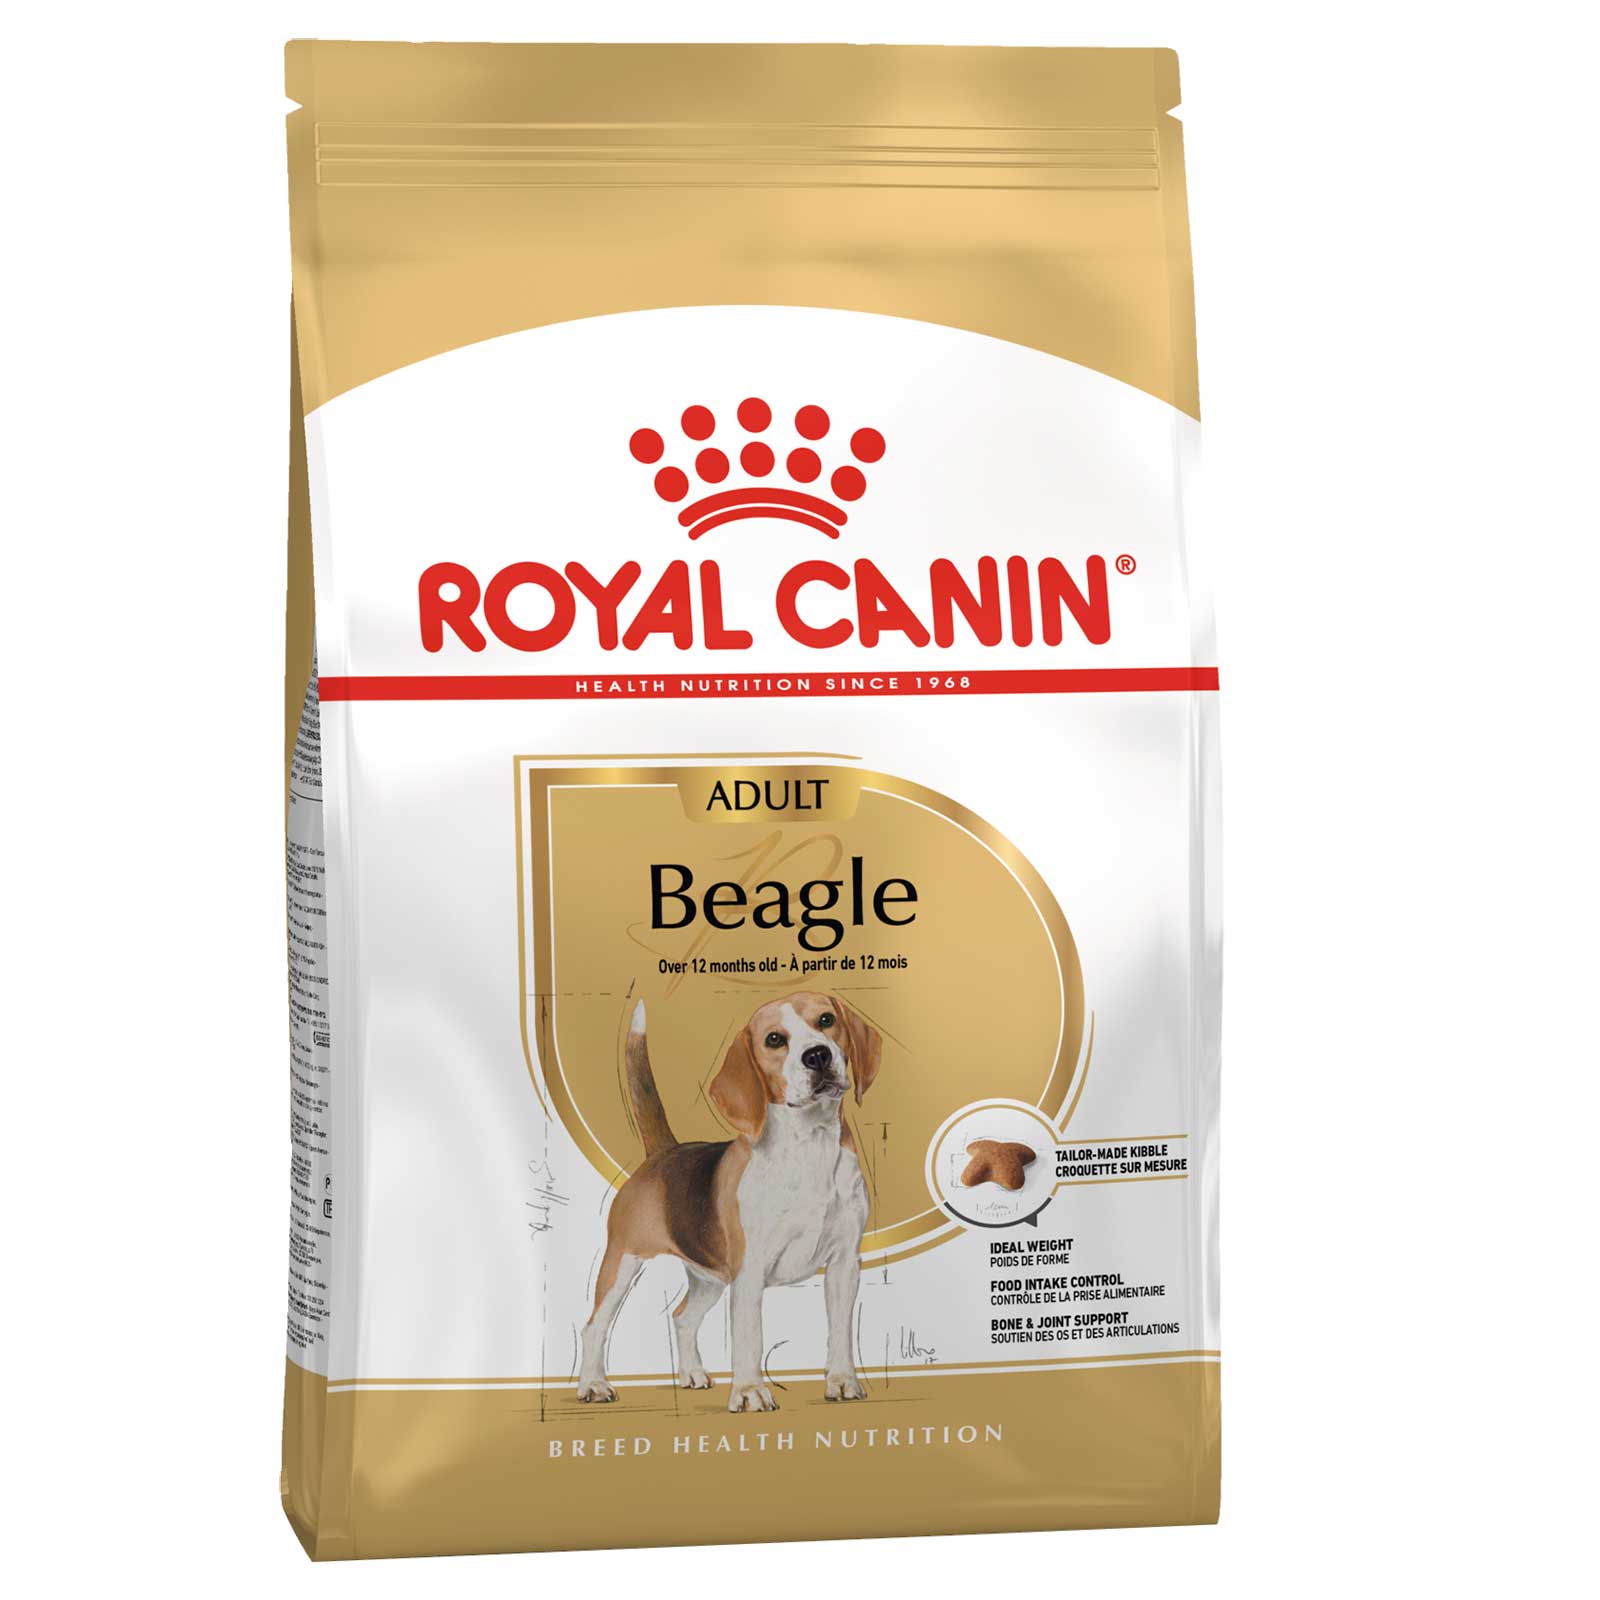 Royal Canin Dog Food Adult Beagle